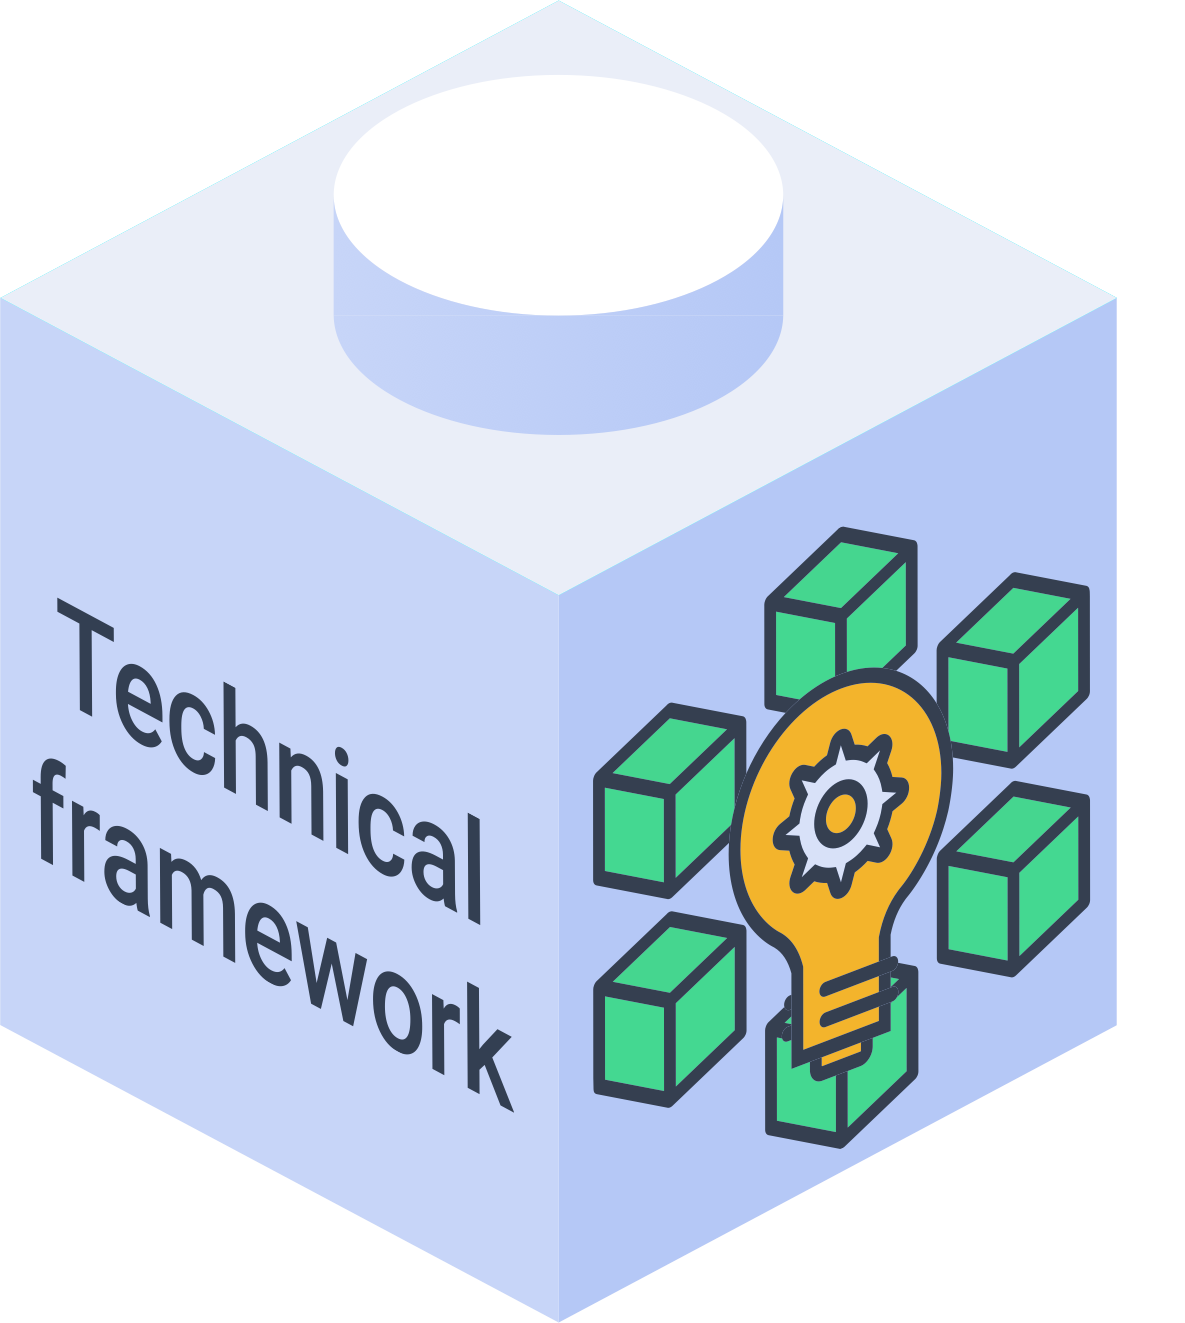 Technical framework